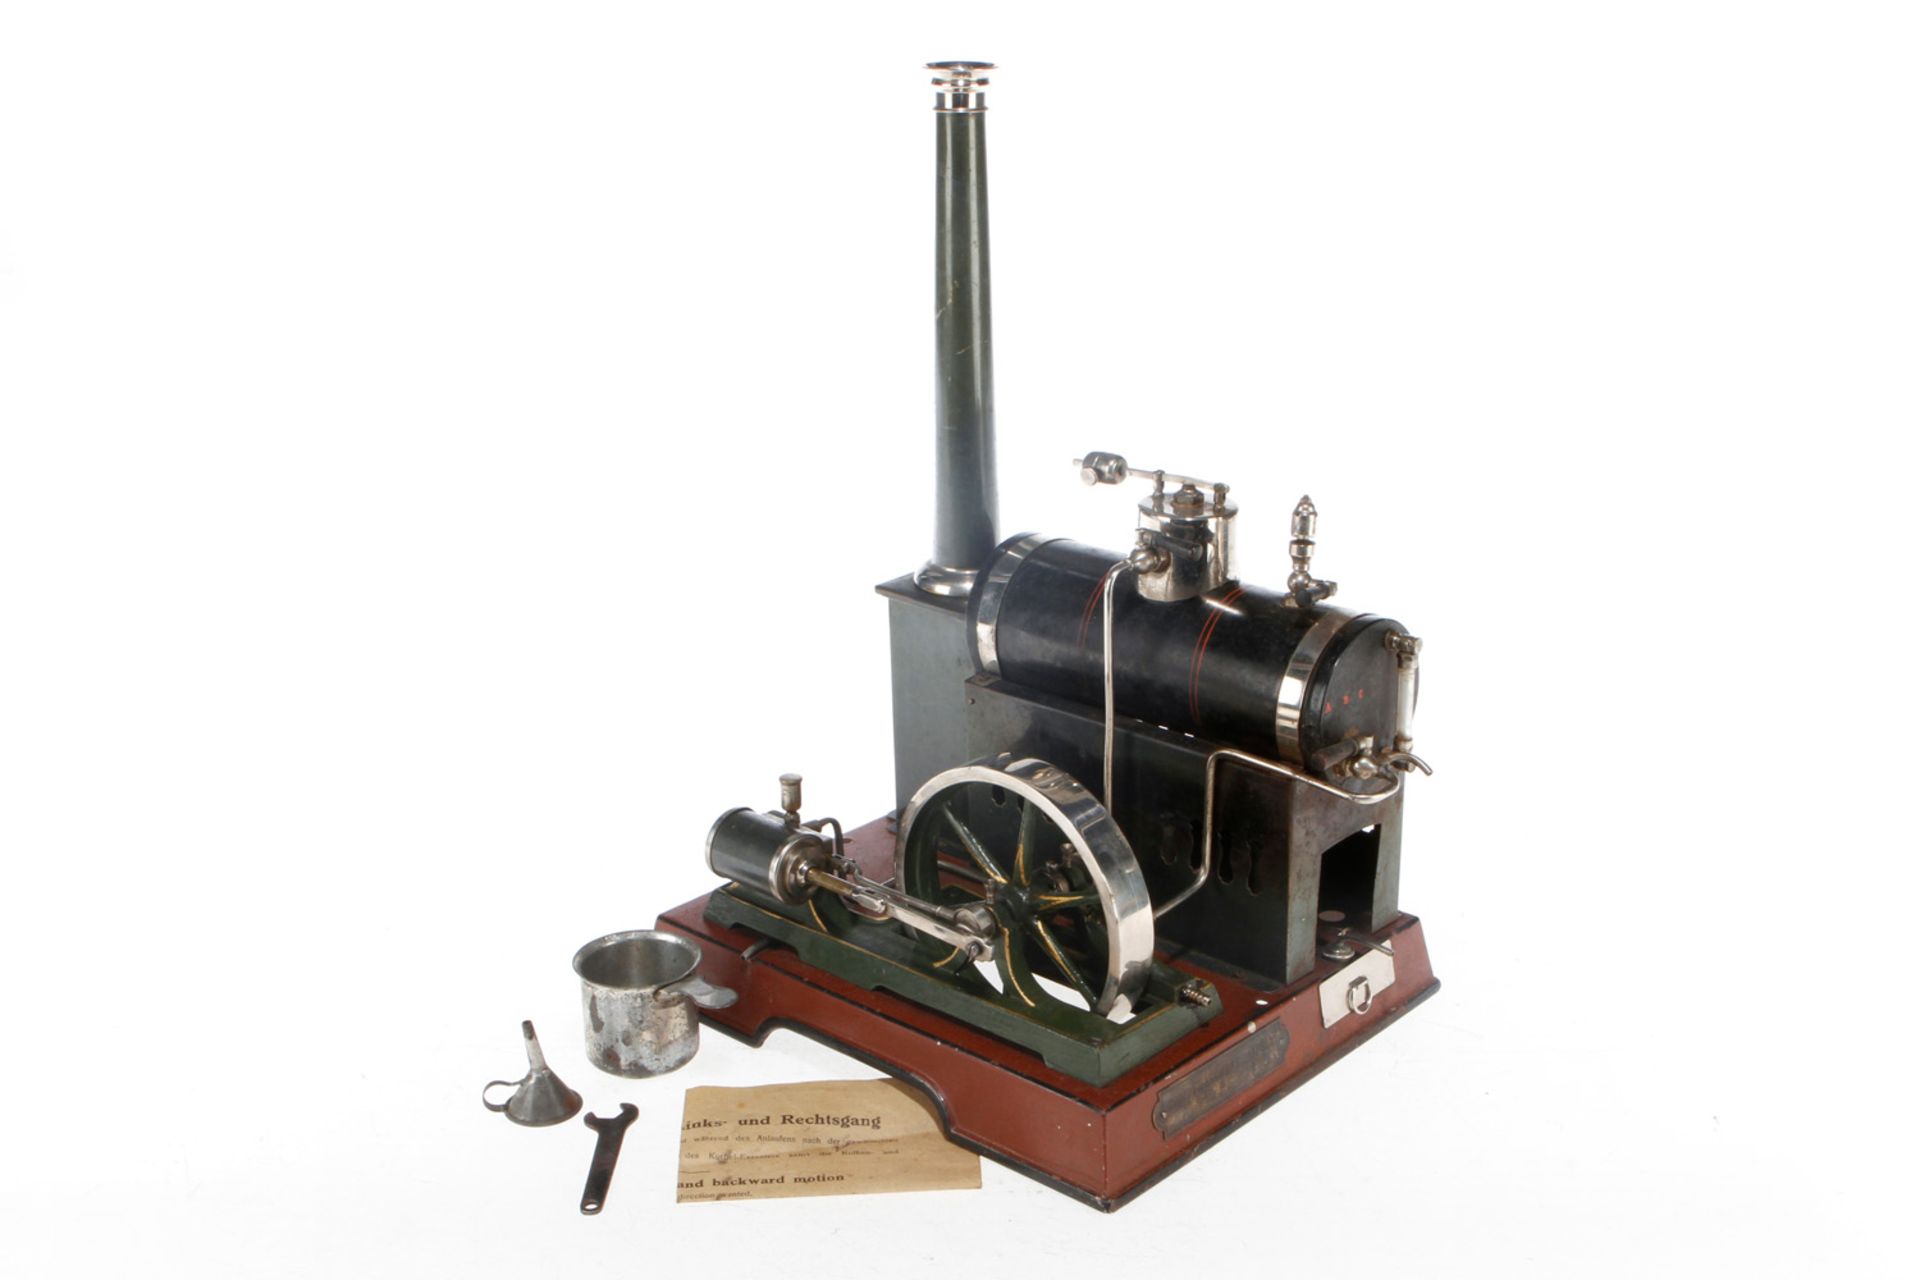 Märklin Dampfmaschine "Lipsia" 4137/7, uralt, liegender lackierter Kessel, KD 7, mit Brenner,